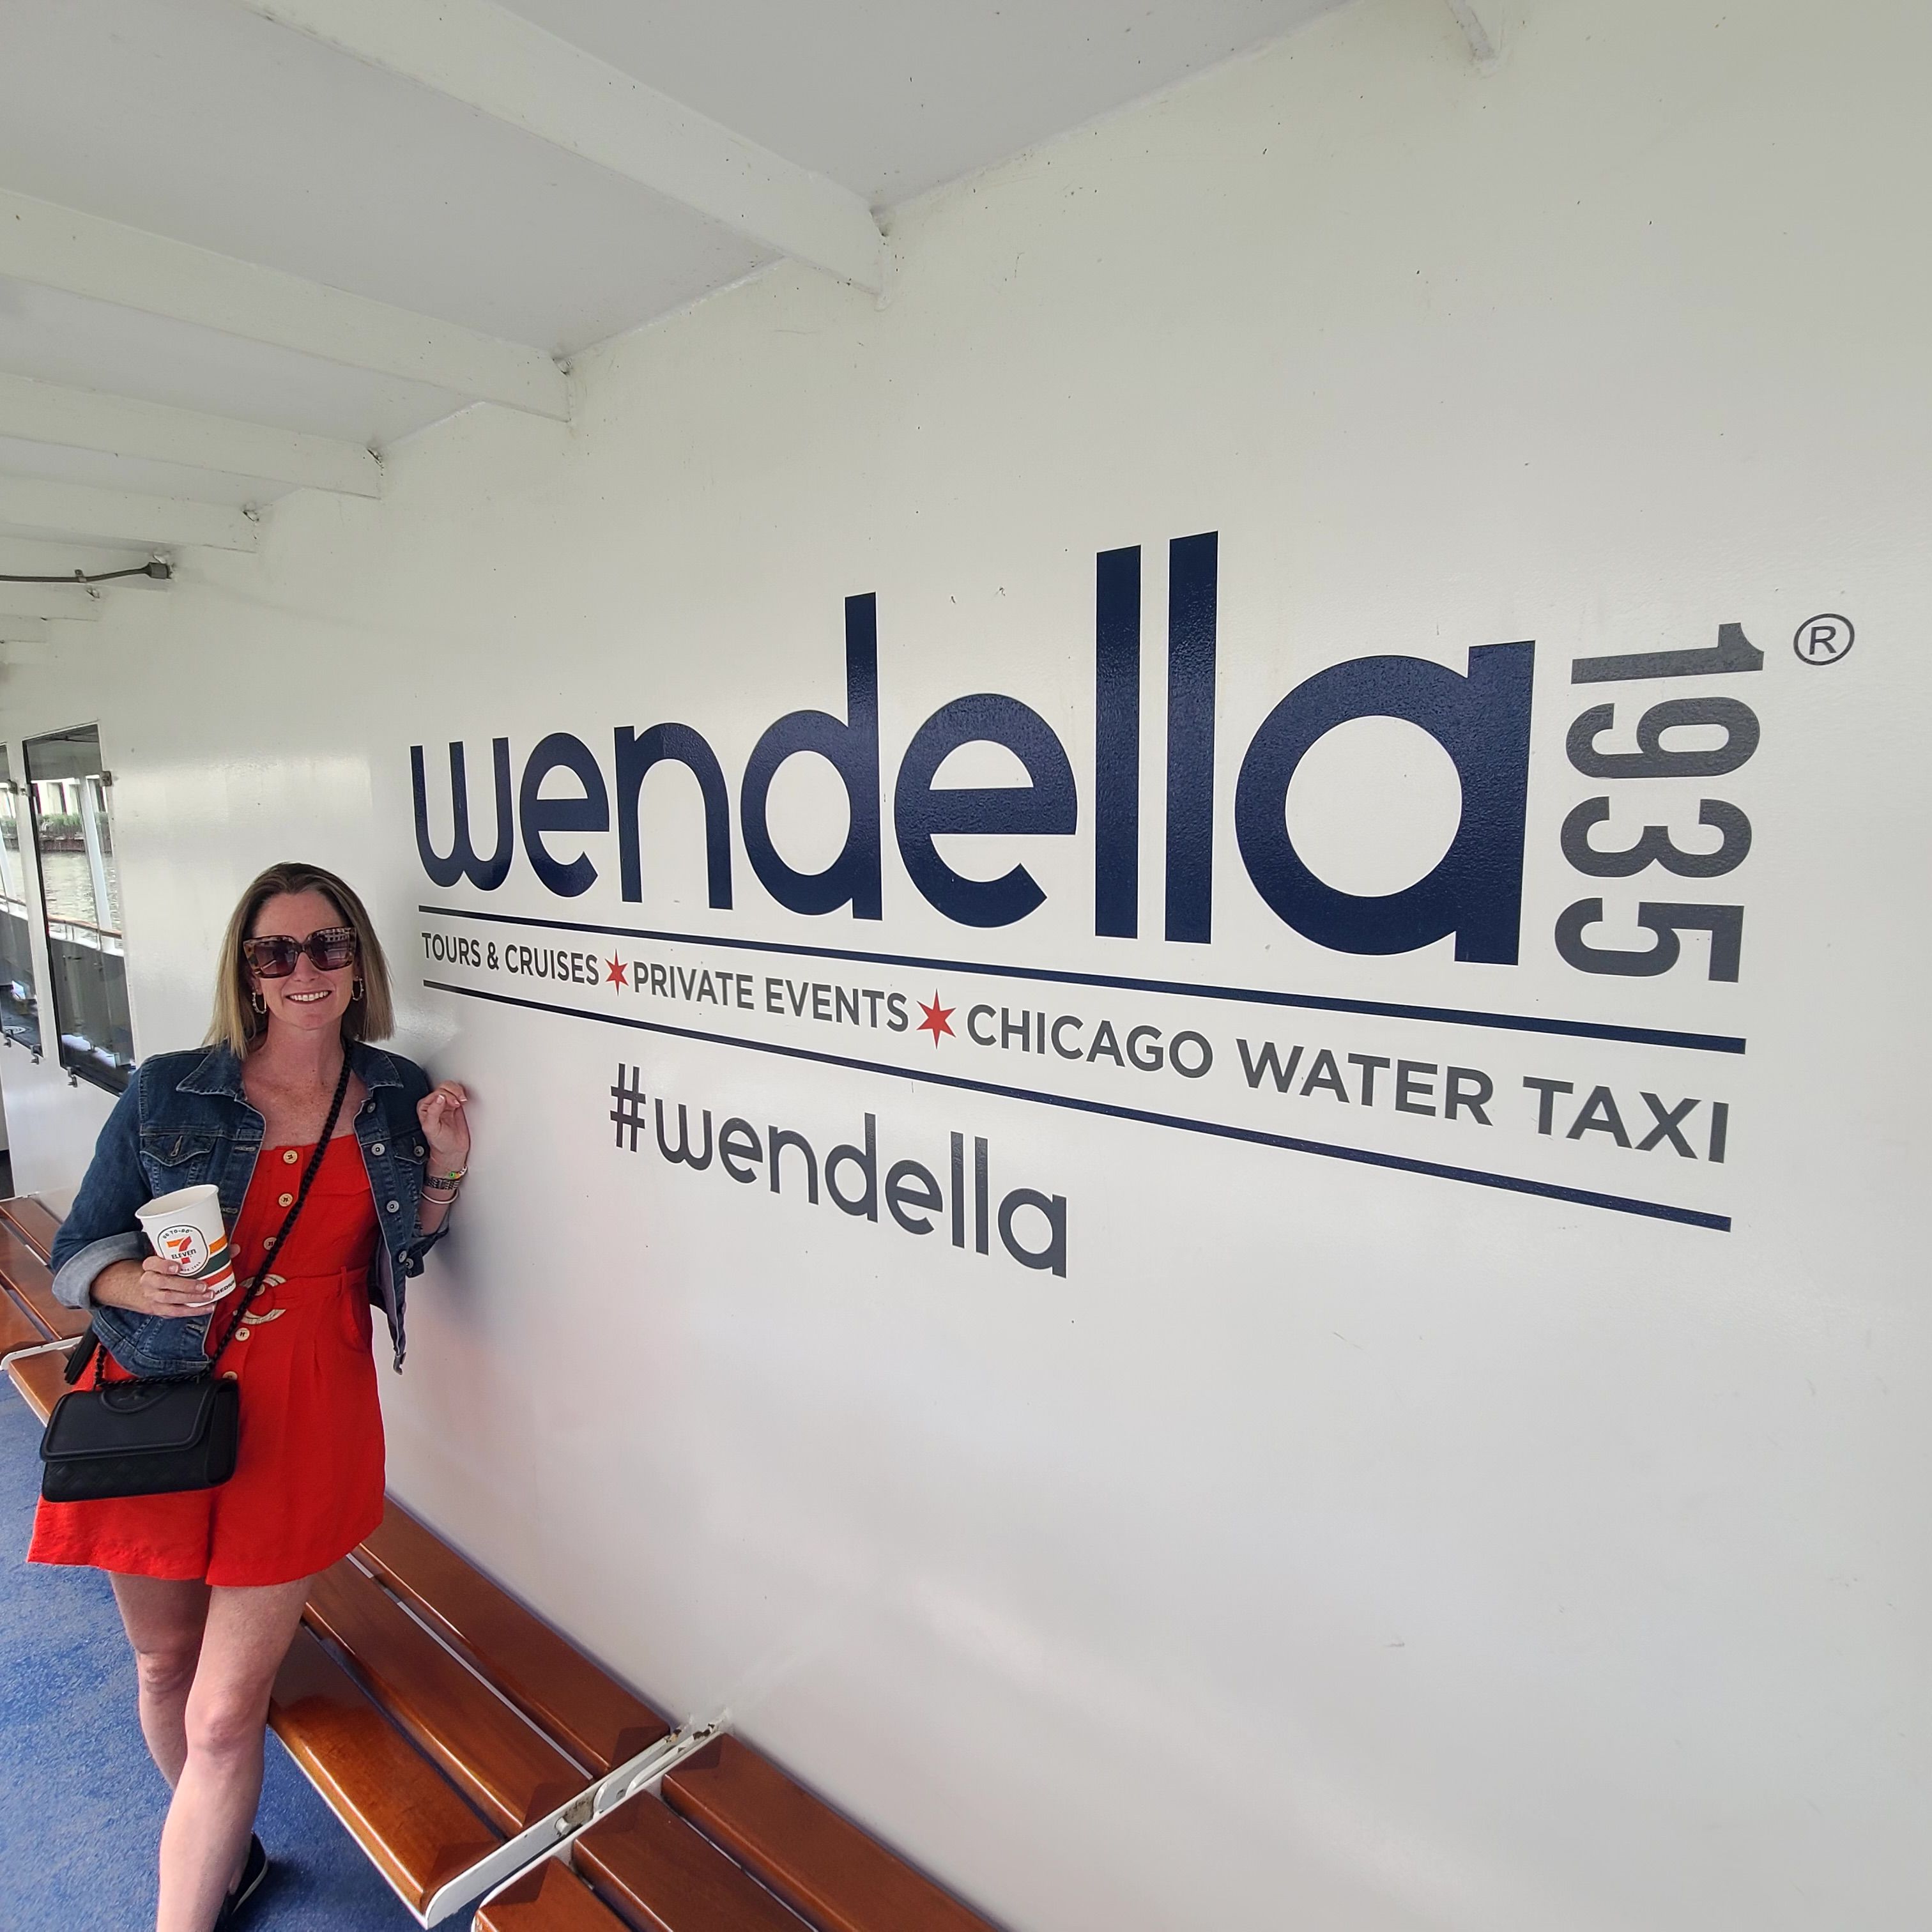 Wendella boat tours- Chicago